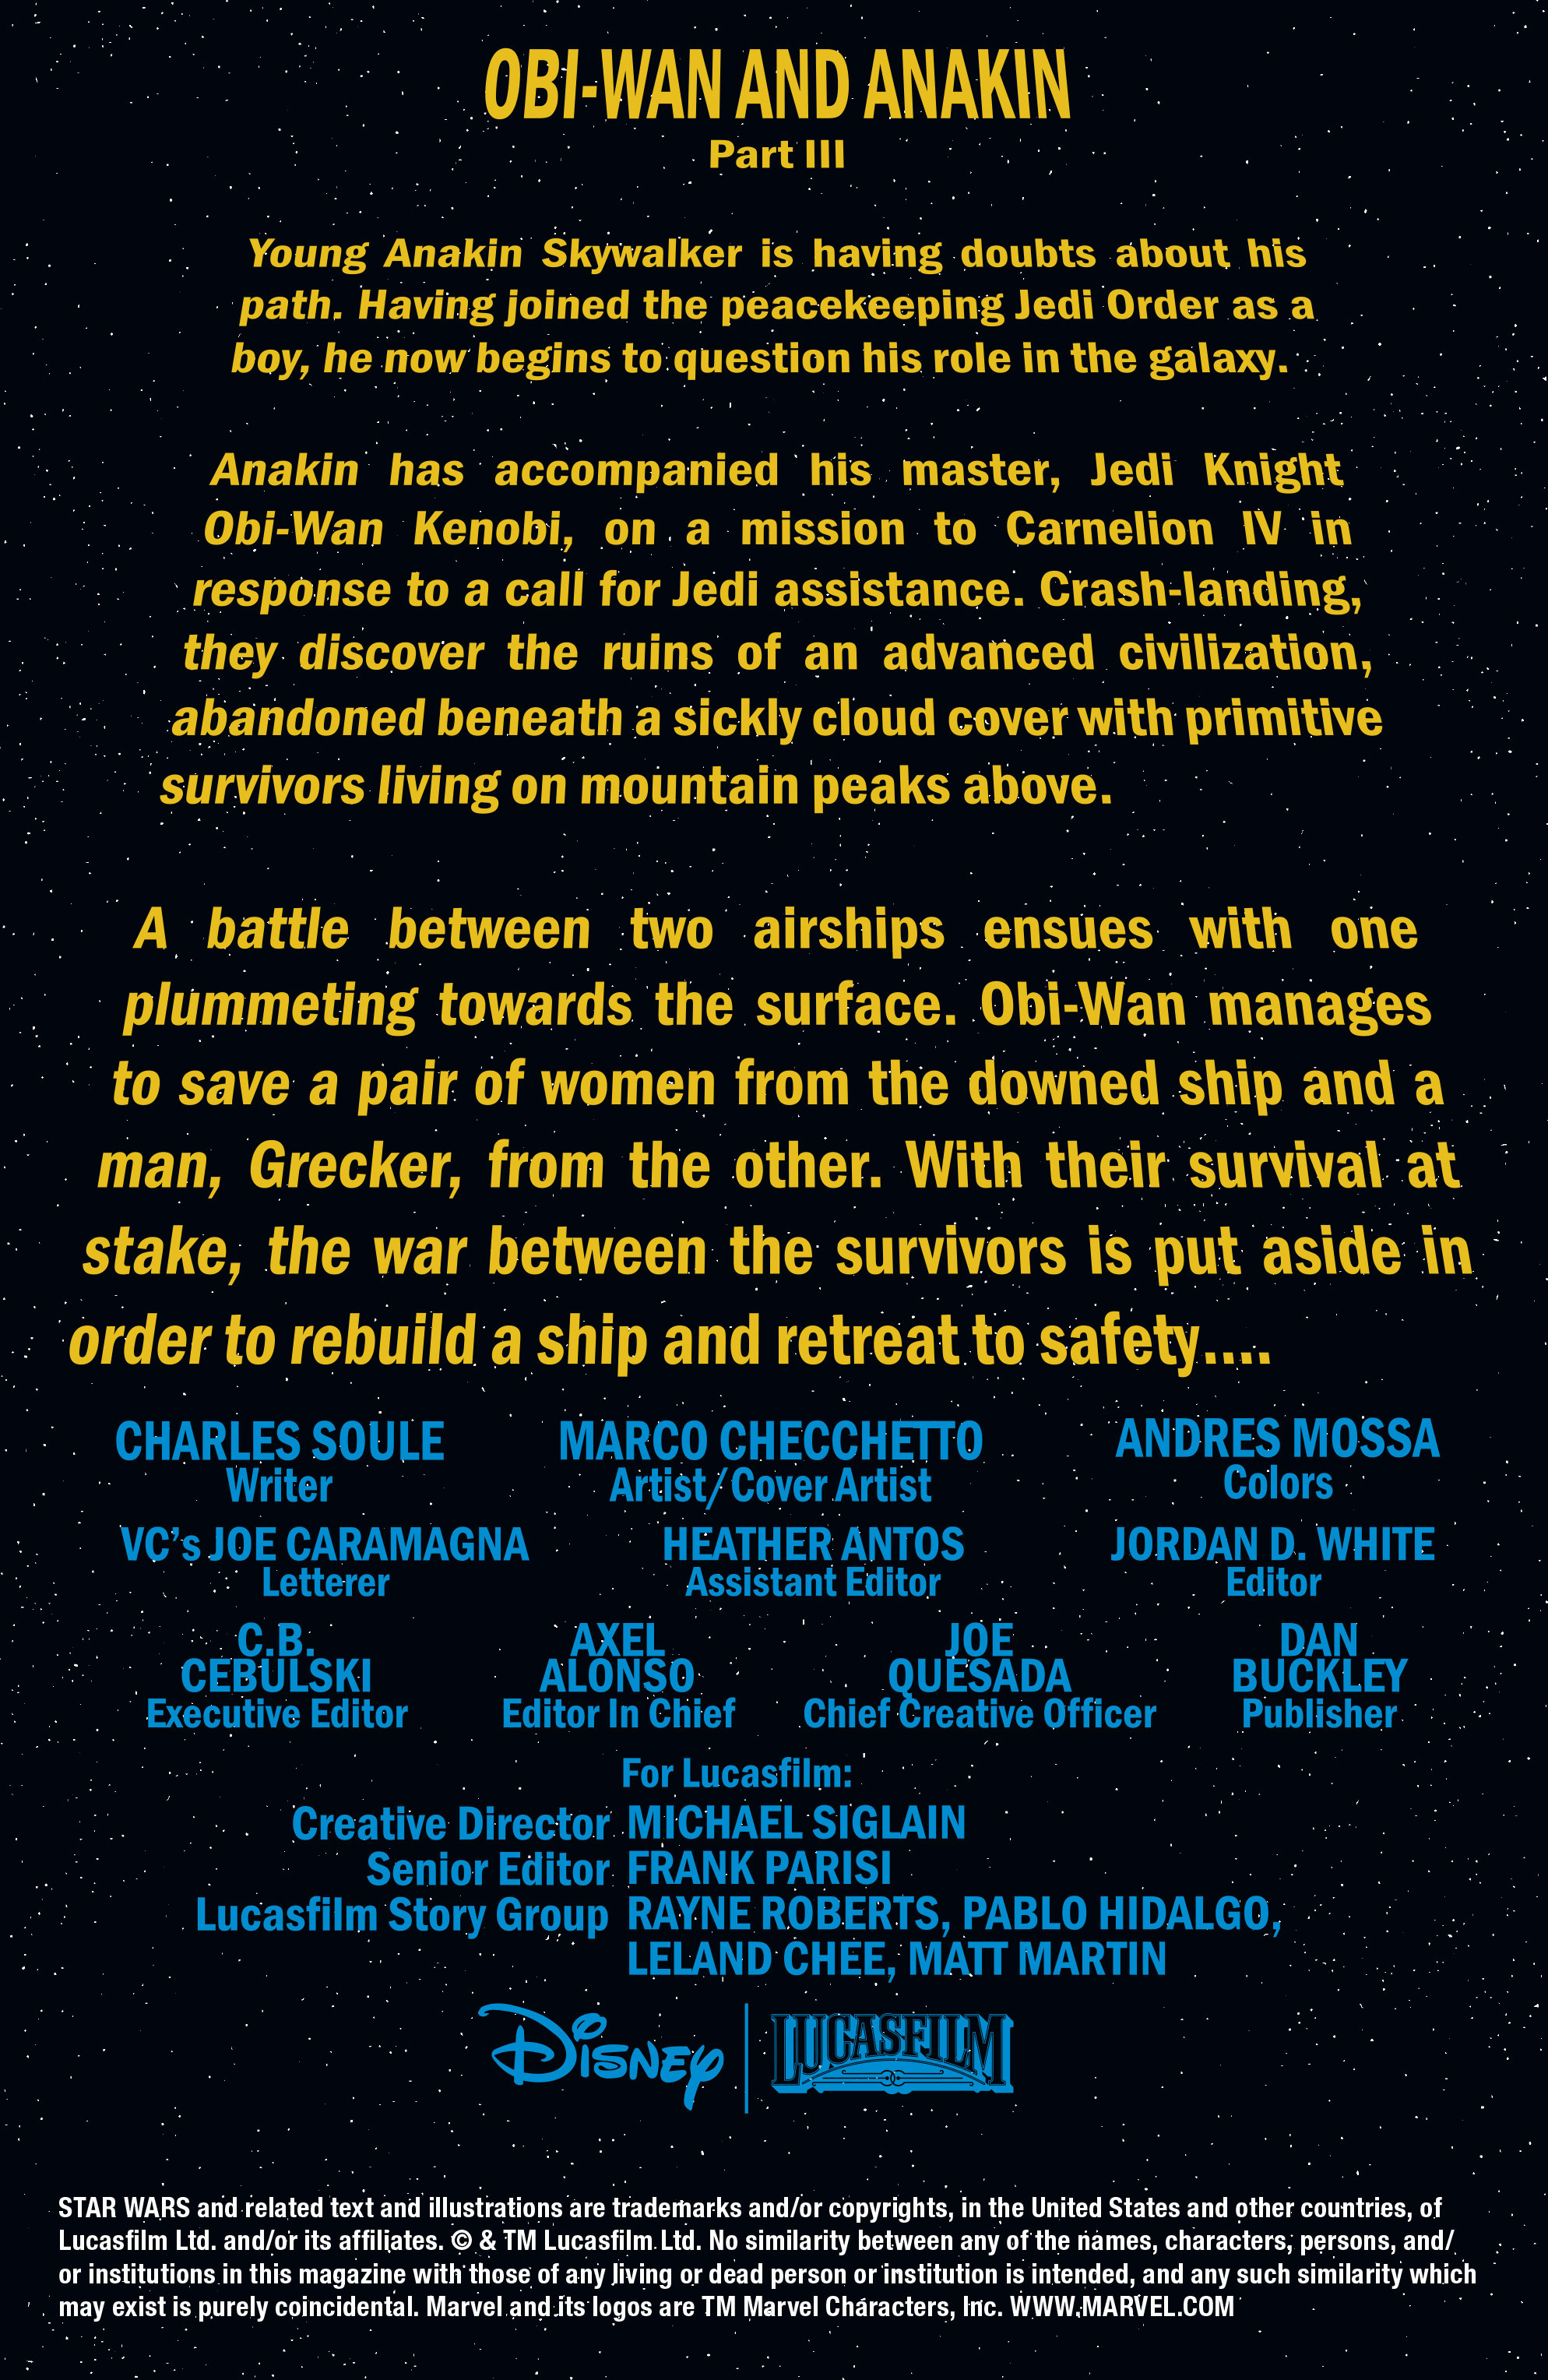 Read online Star Wars: Obi-Wan and Anakin comic -  Issue #3 - 2